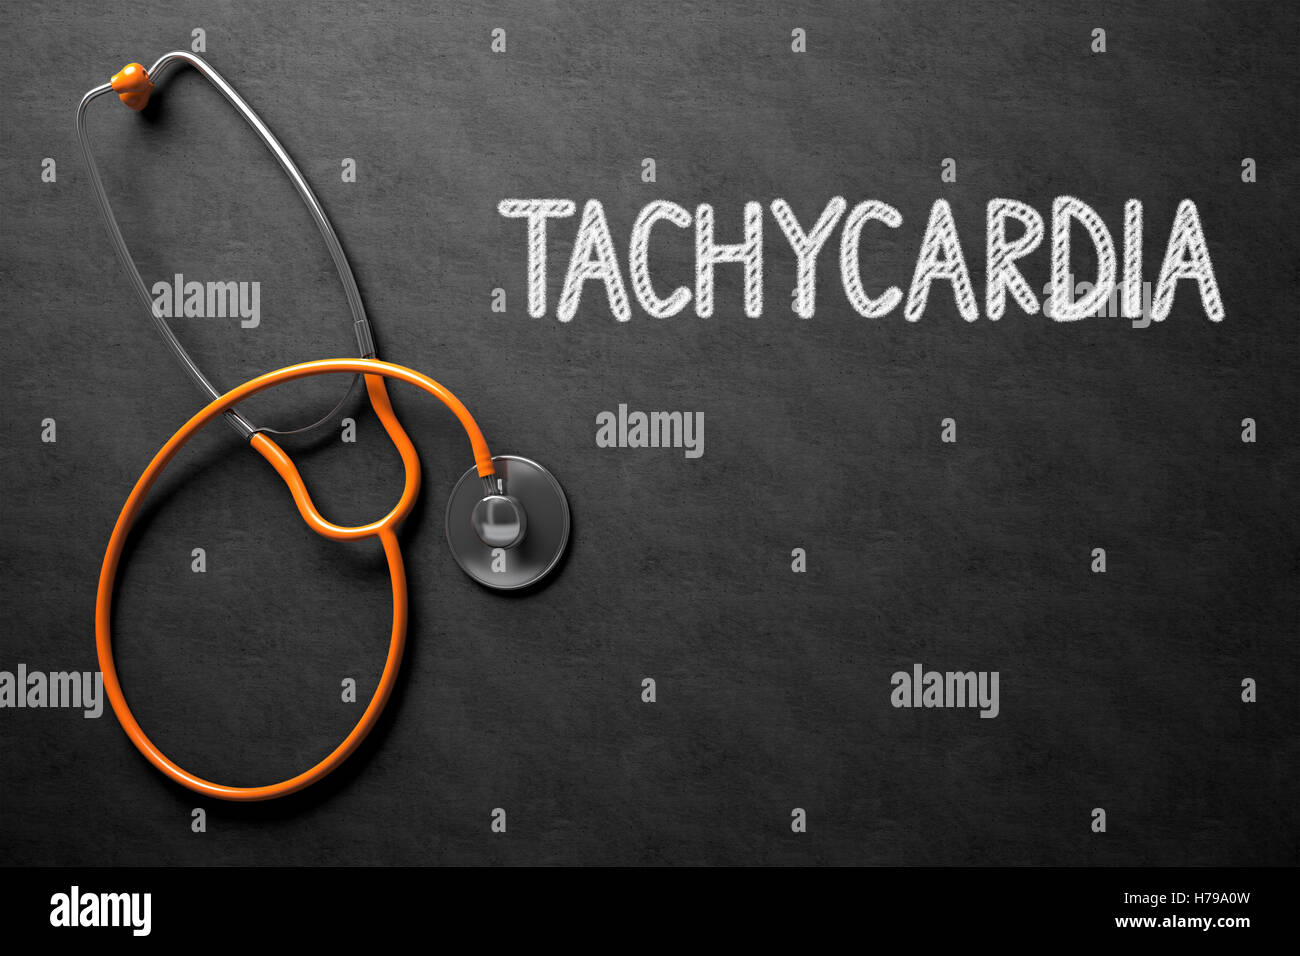 Tachycardia Concept on Chalkboard. 3D Illustration. Stock Photo